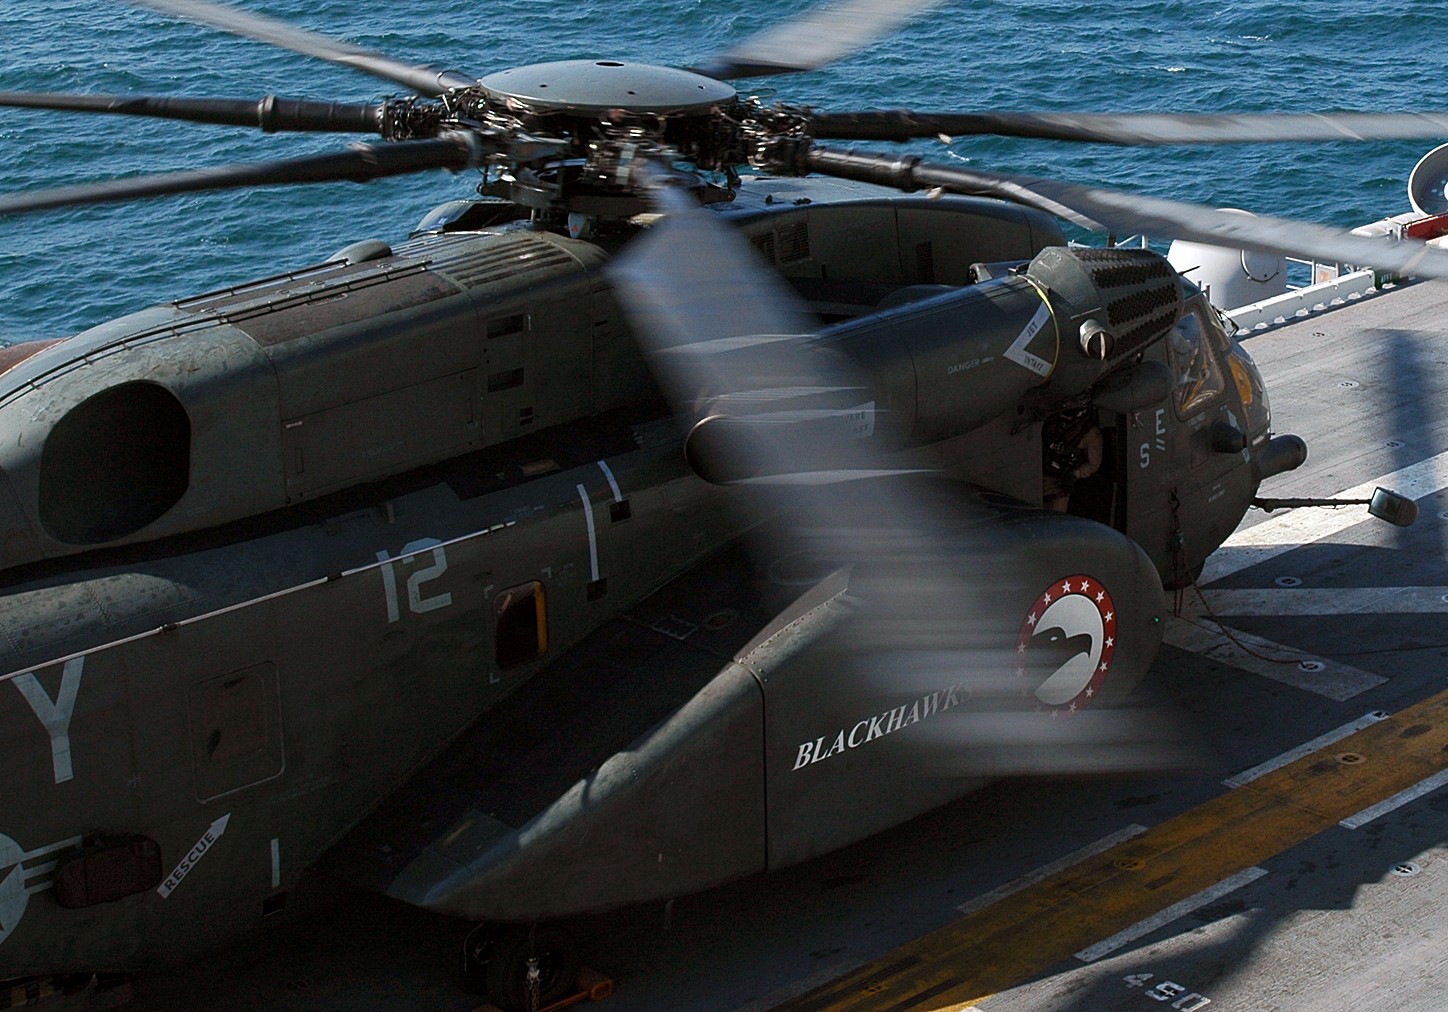 hm-15 blackhawks helicopter mine countermeasures squadron navy mh-53e sea dragon 67 uss iwo jima lhd-7